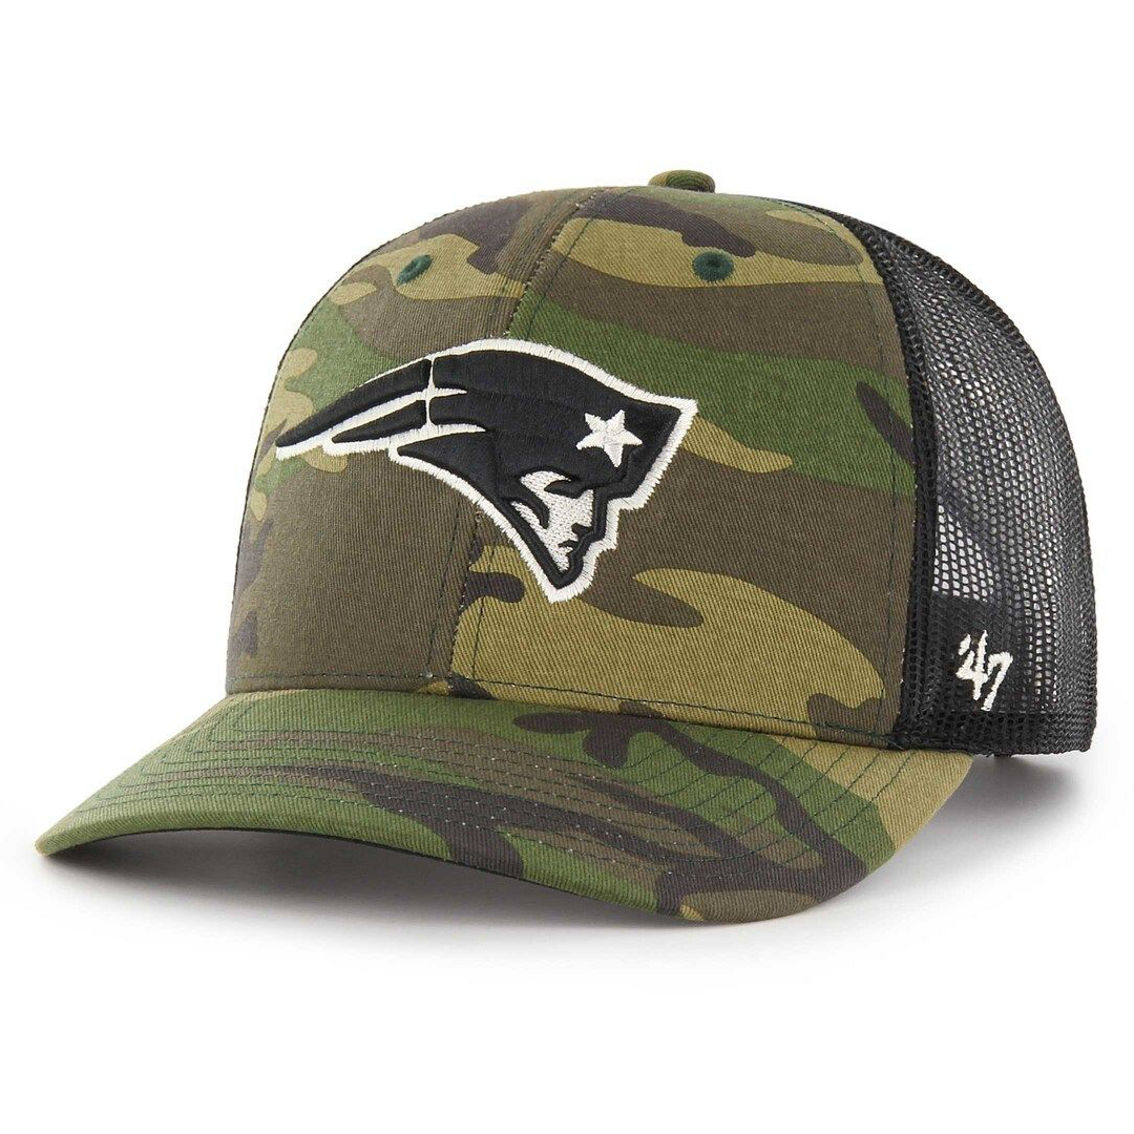 '47 Men's Camo/Black New England Patriots Trucker Adjustable Hat - Image 2 of 3